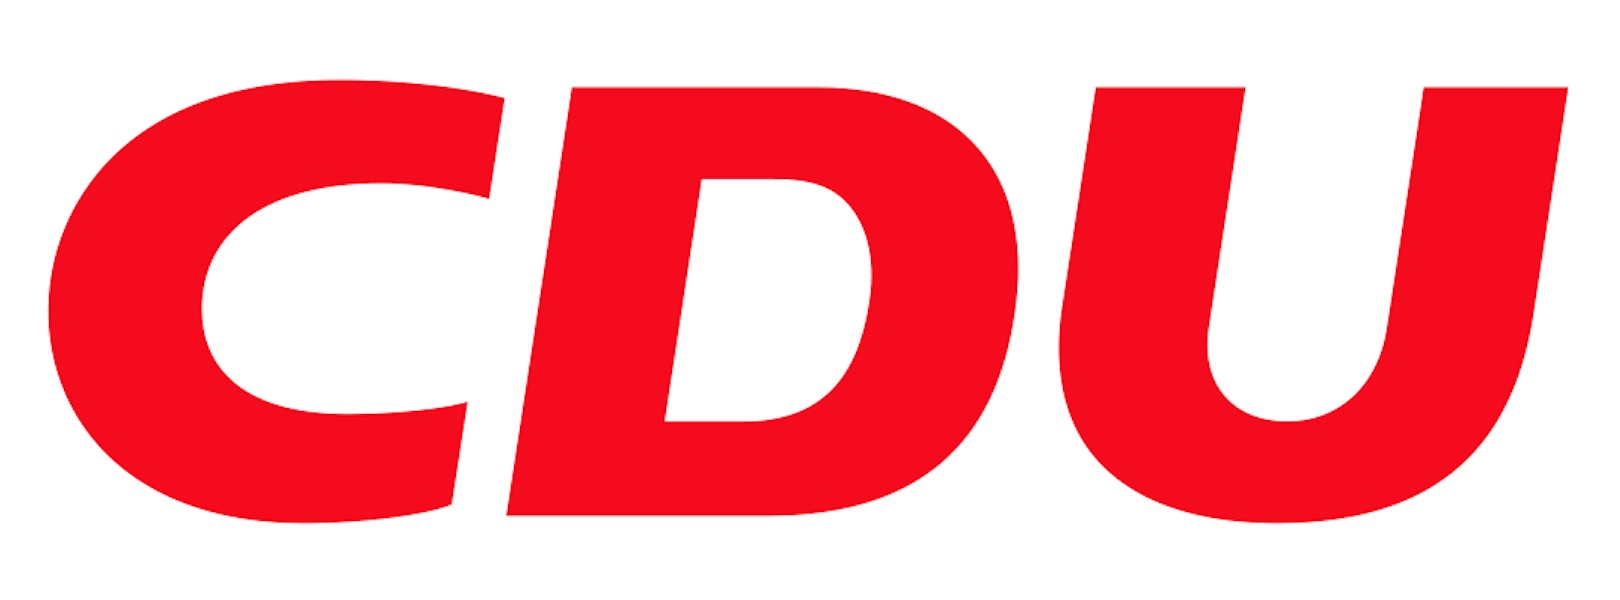 2_Logo_CDU.jpg